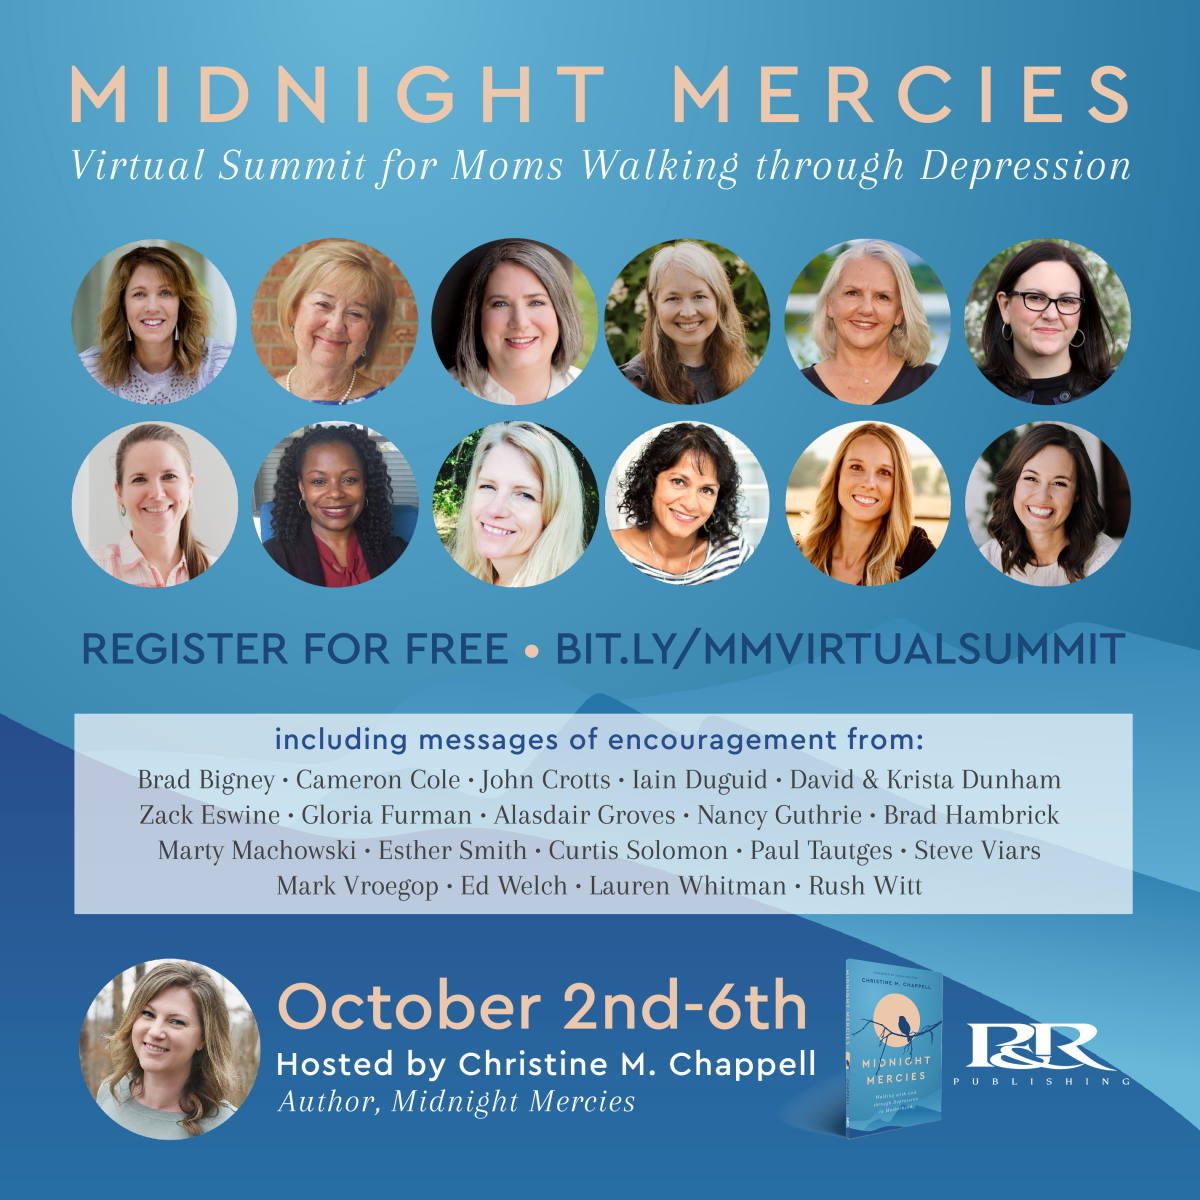 Midnight Mercies Virtual Summit Oct. 2-6